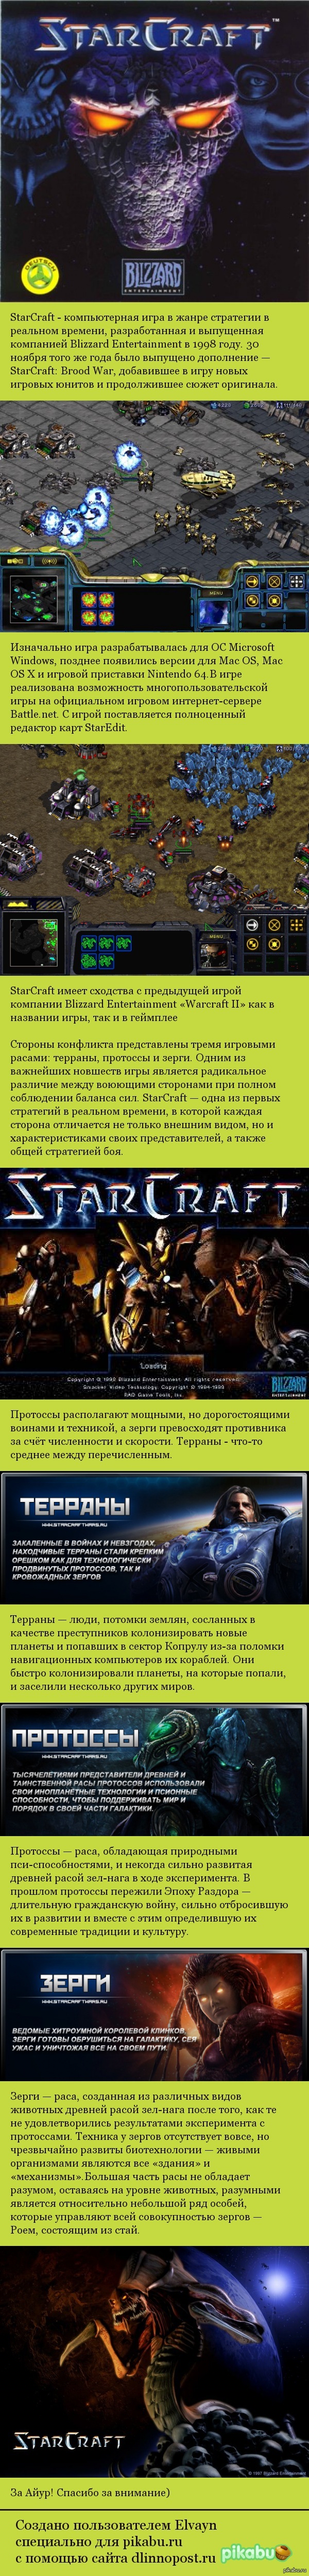    ,       Starcraft.